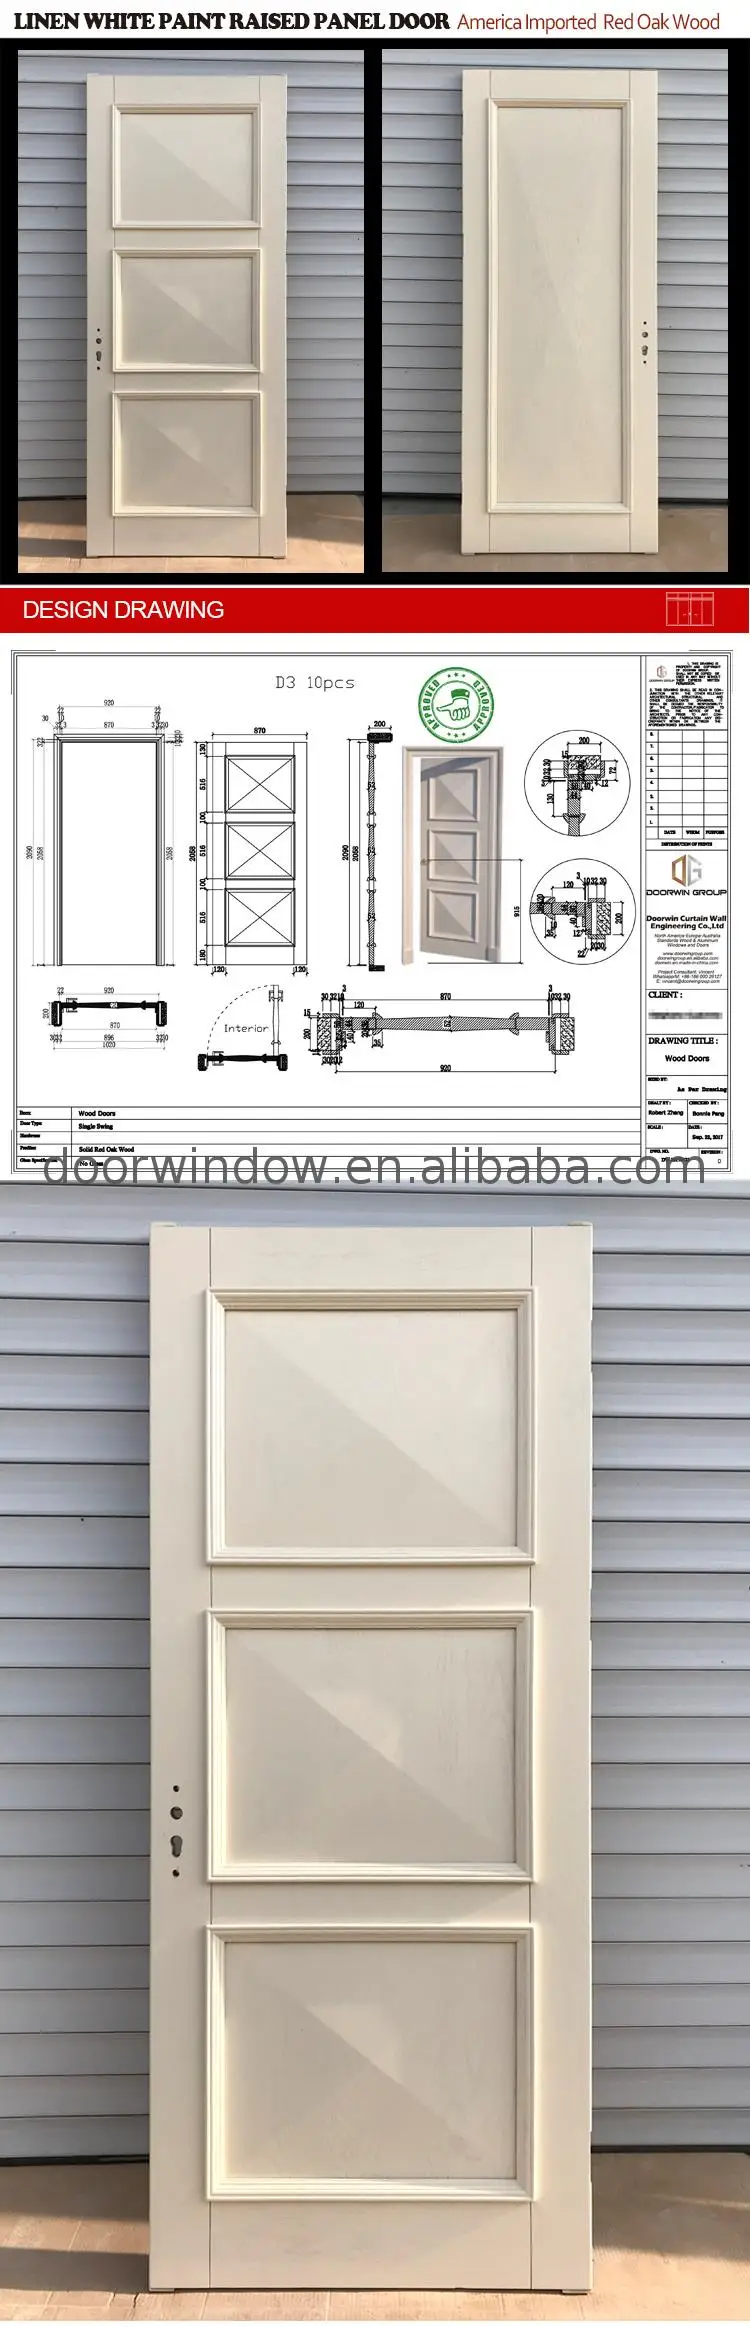 Factory price wholesale modern door frame design images for home